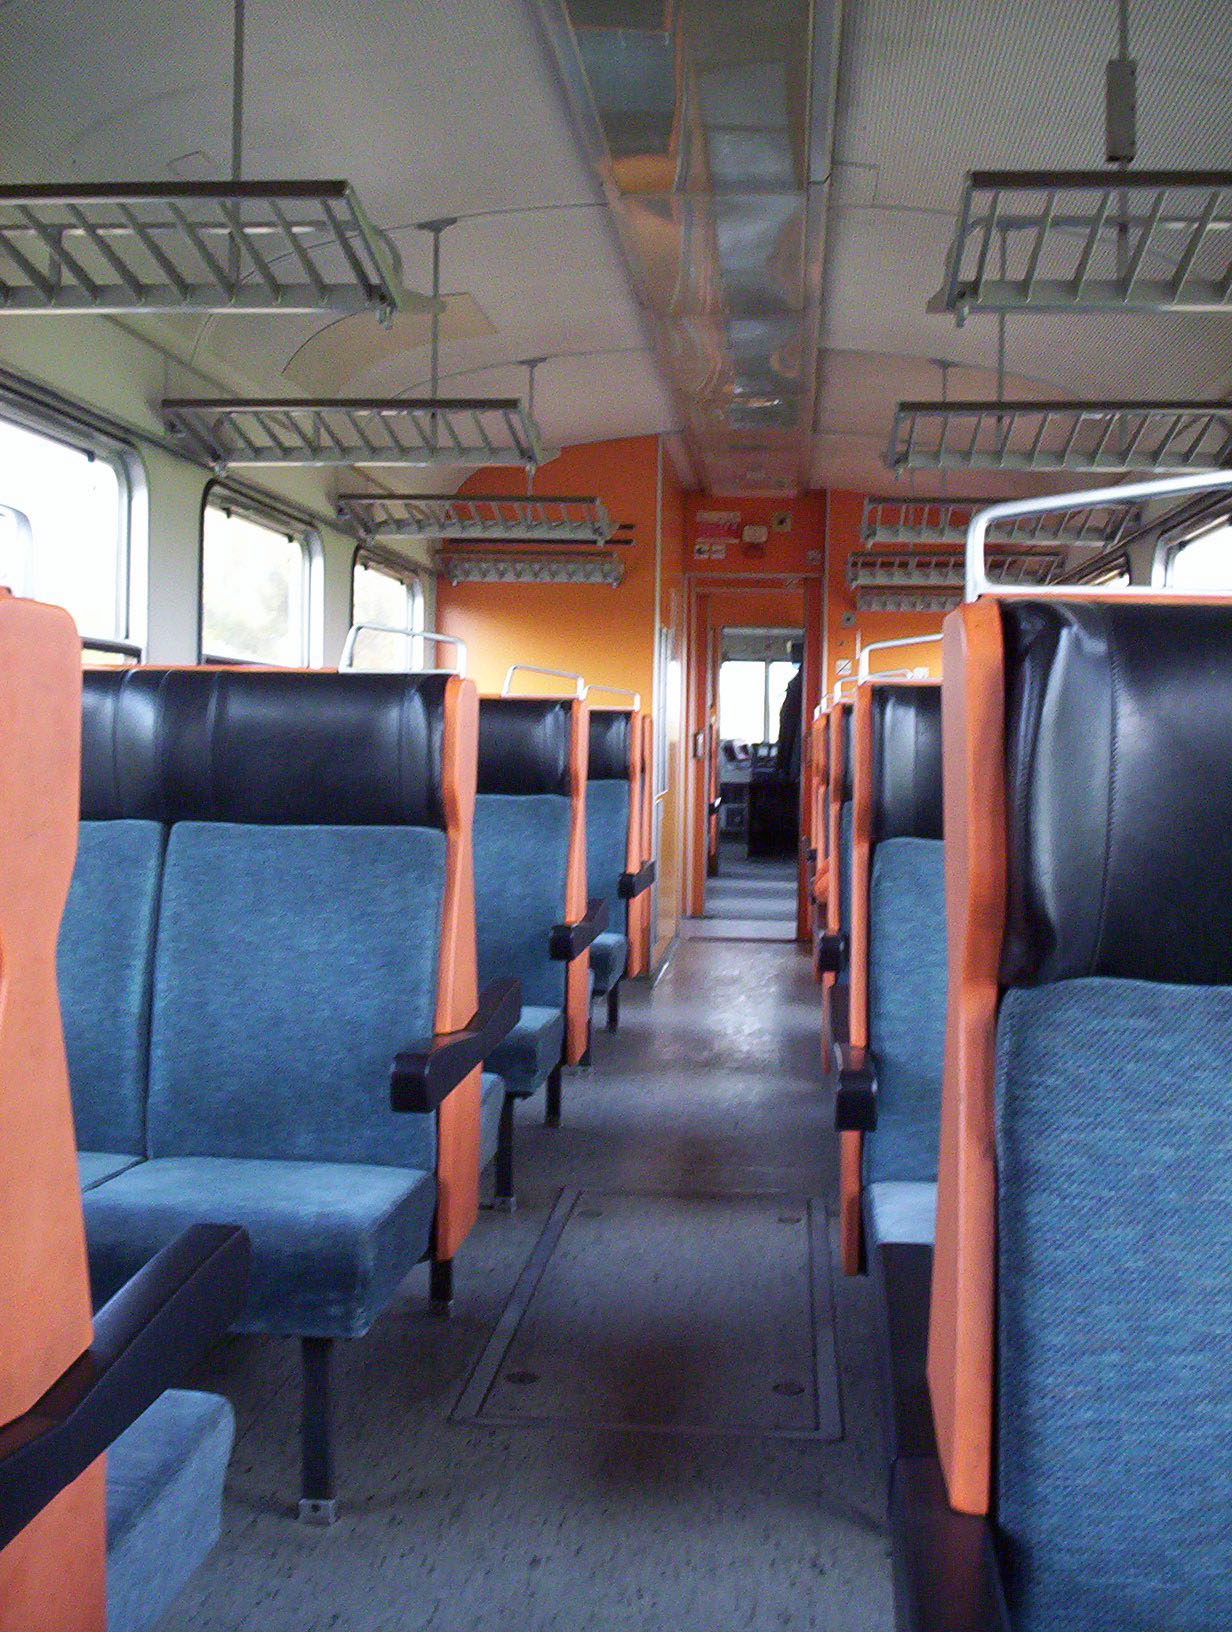 'Polsterklasse' in Triebwagen (Farbe?) VT628-018_interior